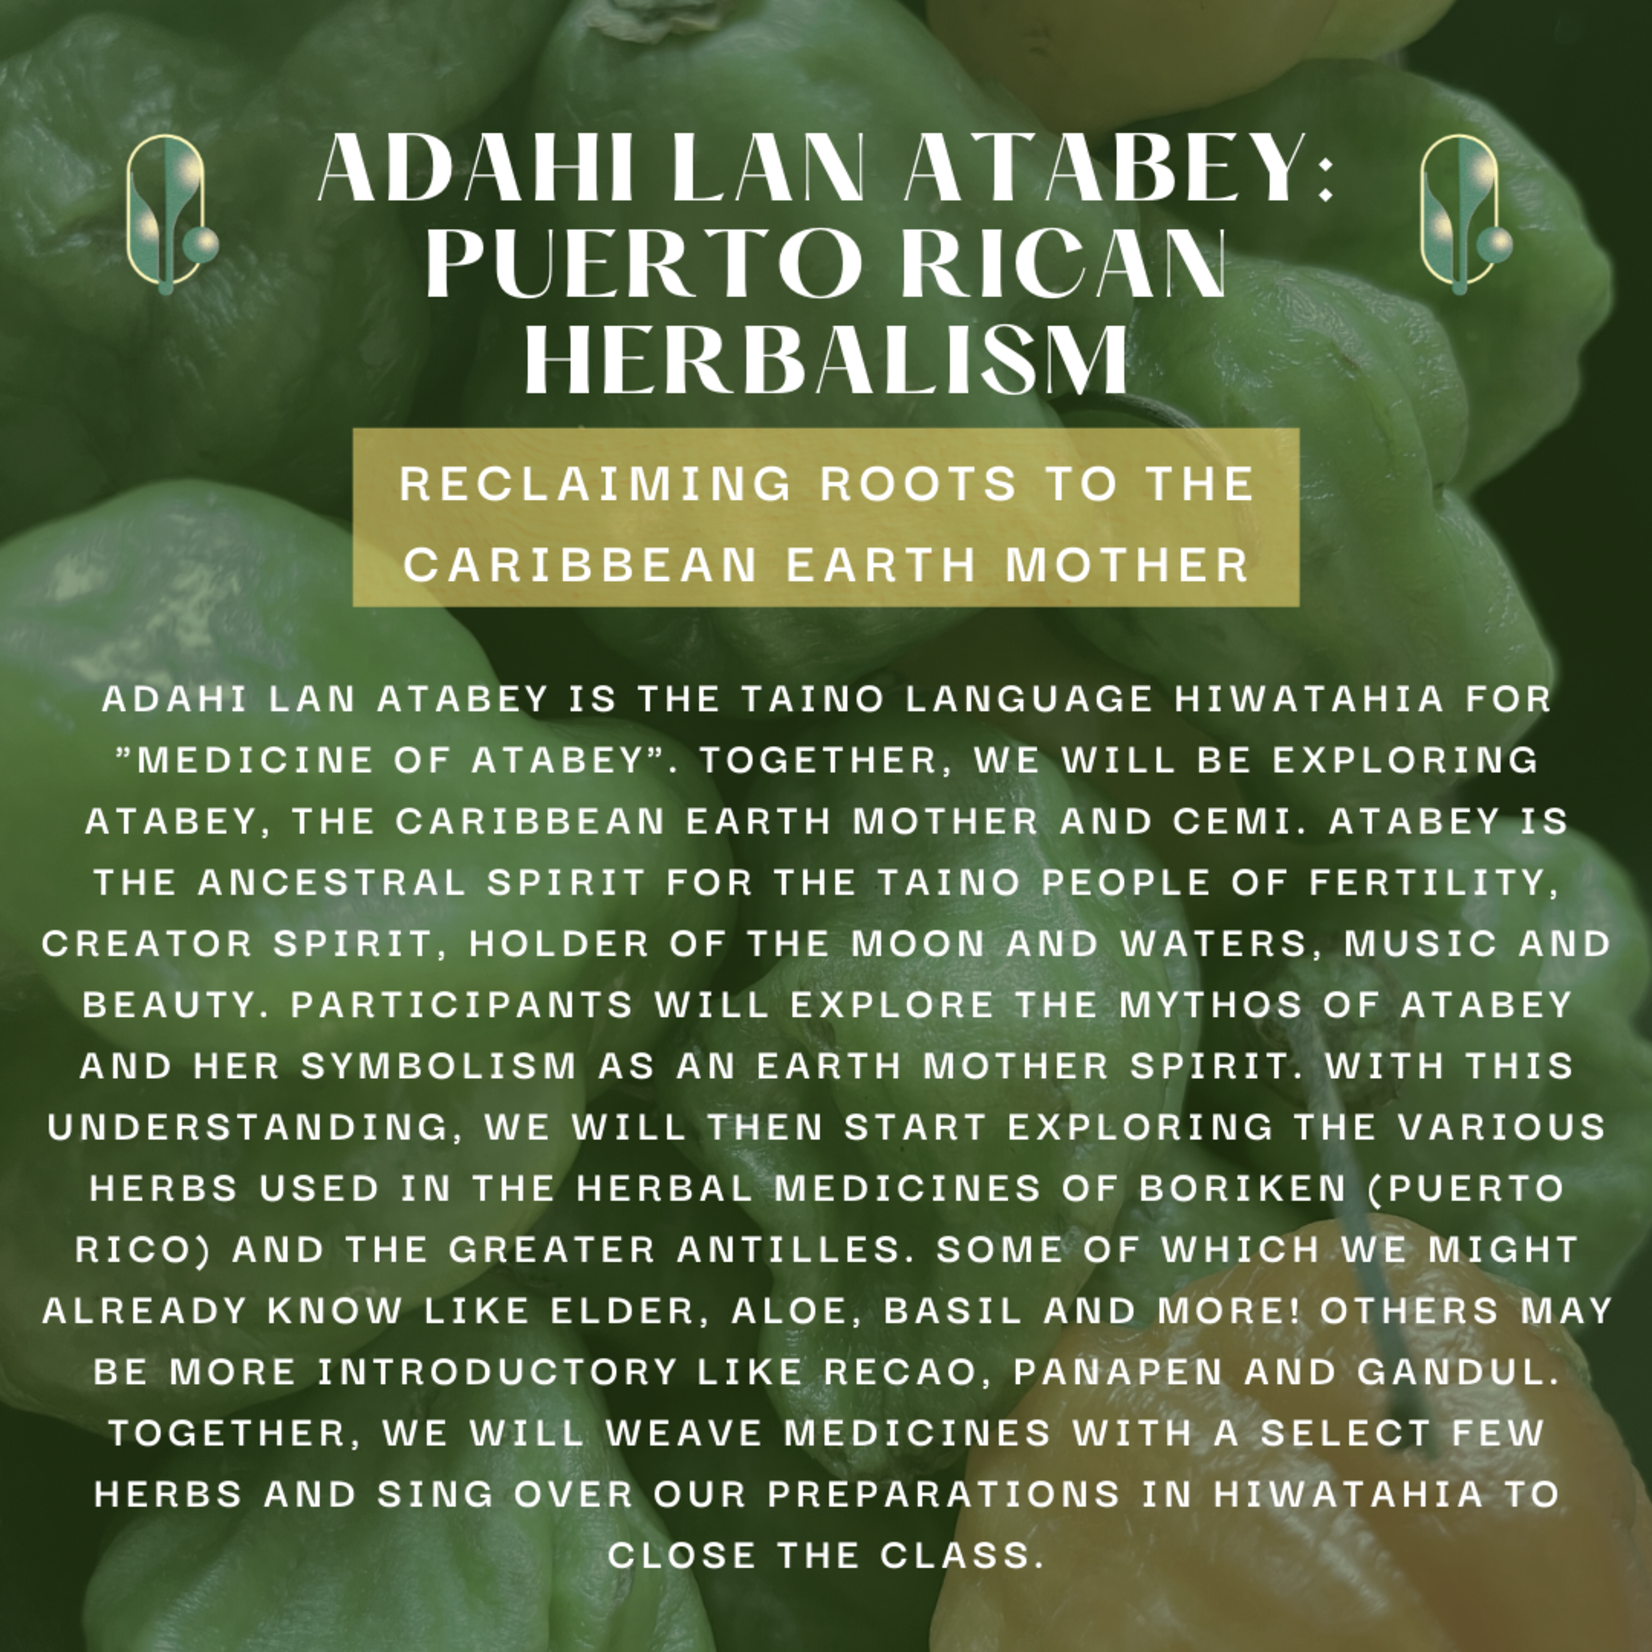 Adahi Lan Atabey: Puerto Rican Herbalism  - CLASS with Maggie Rivera